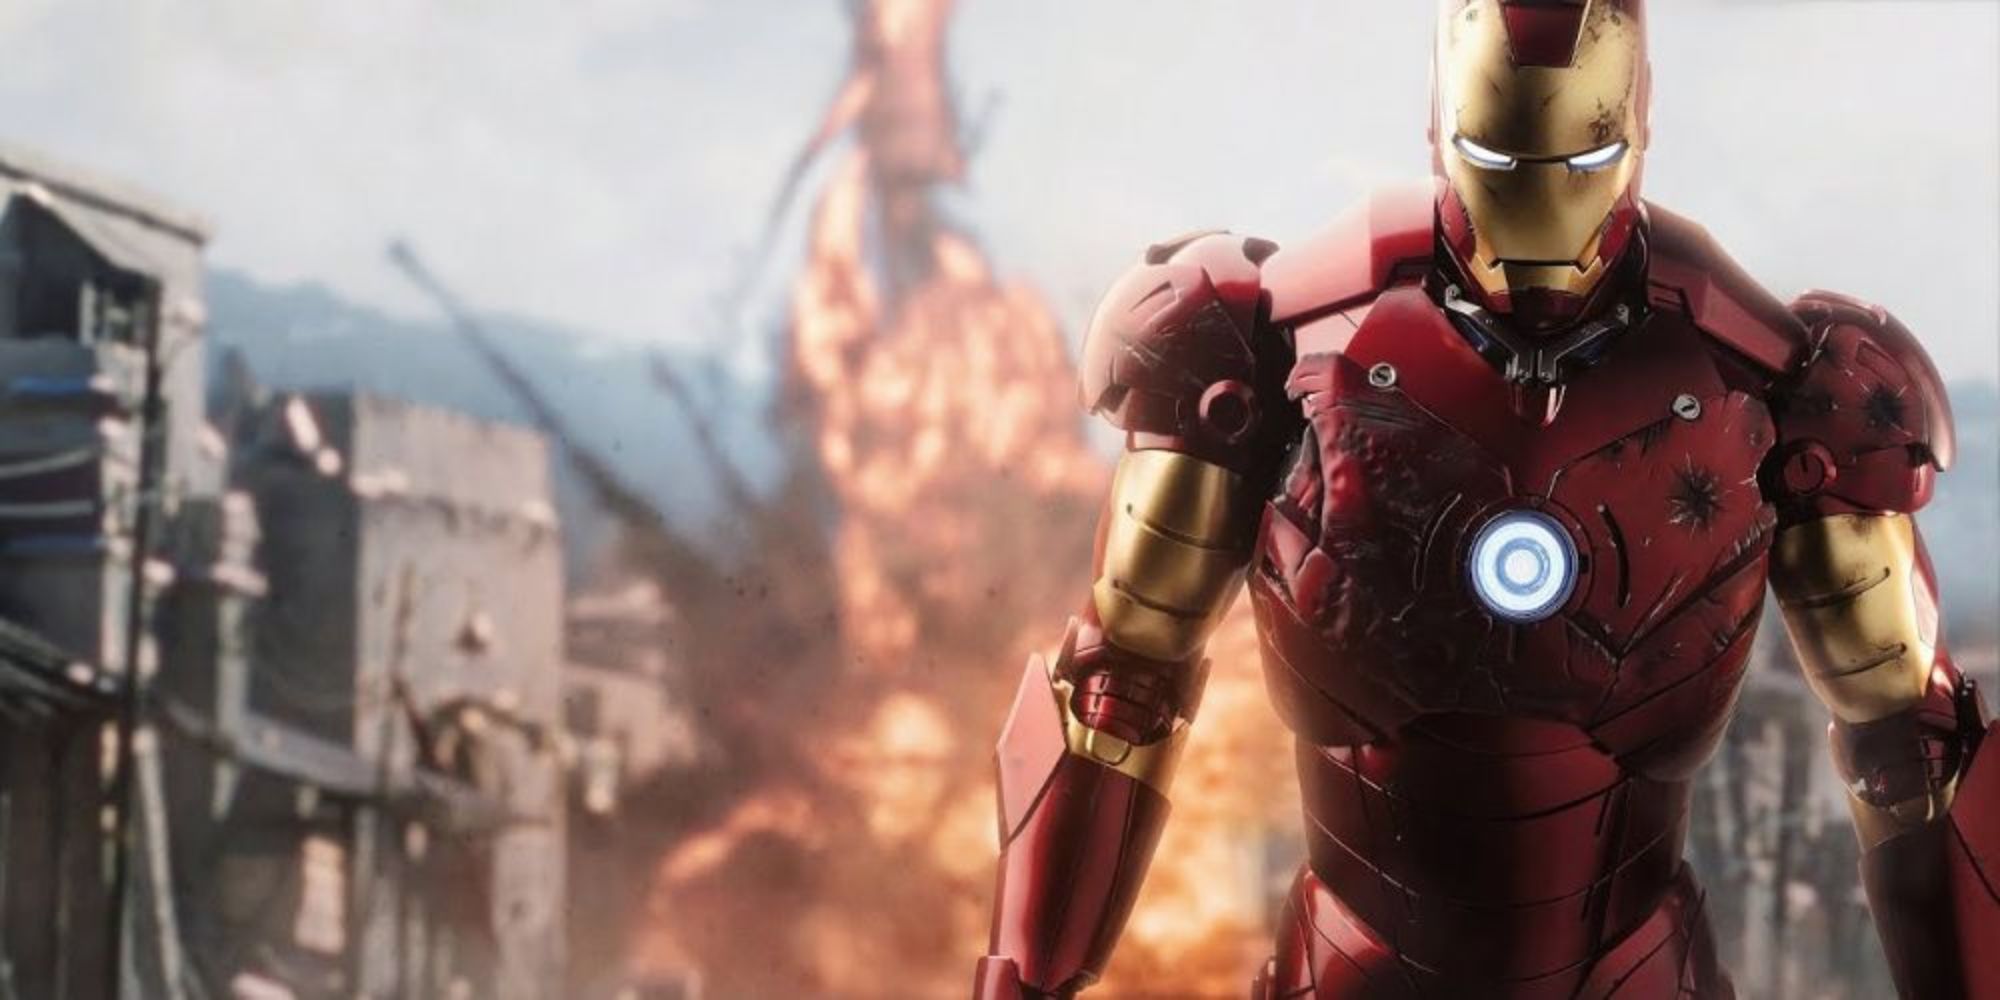 Iron Man walking away from explosion